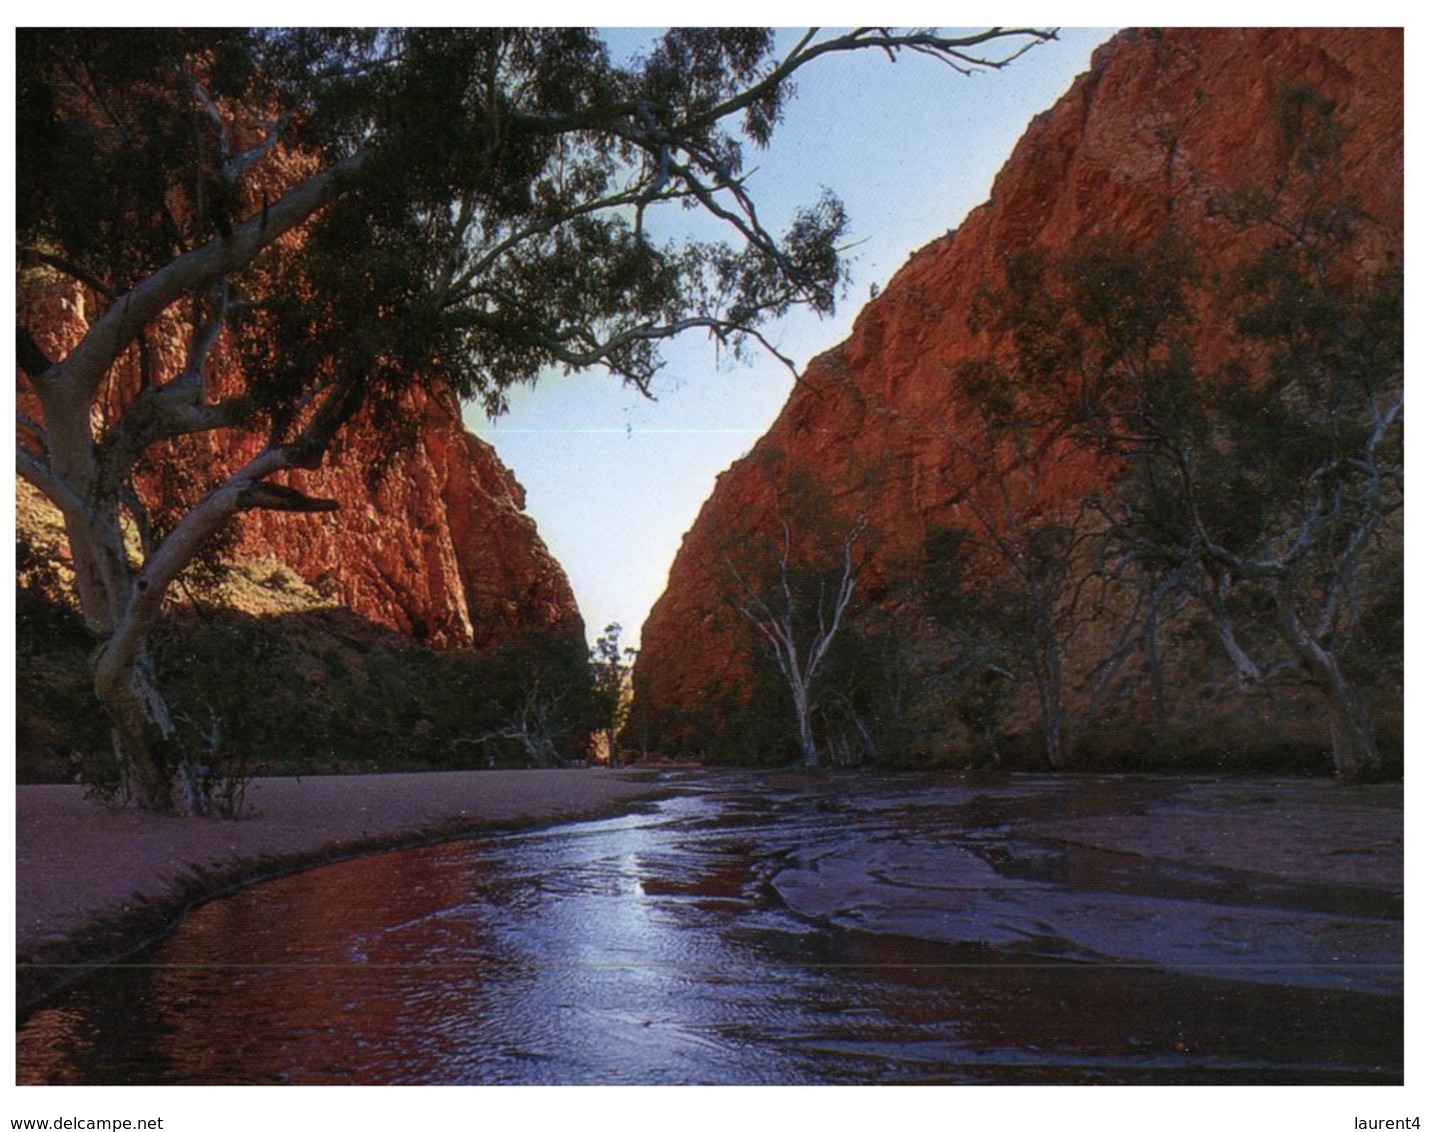 (4444) Australia - NT - Simpson's Gap - The Red Centre